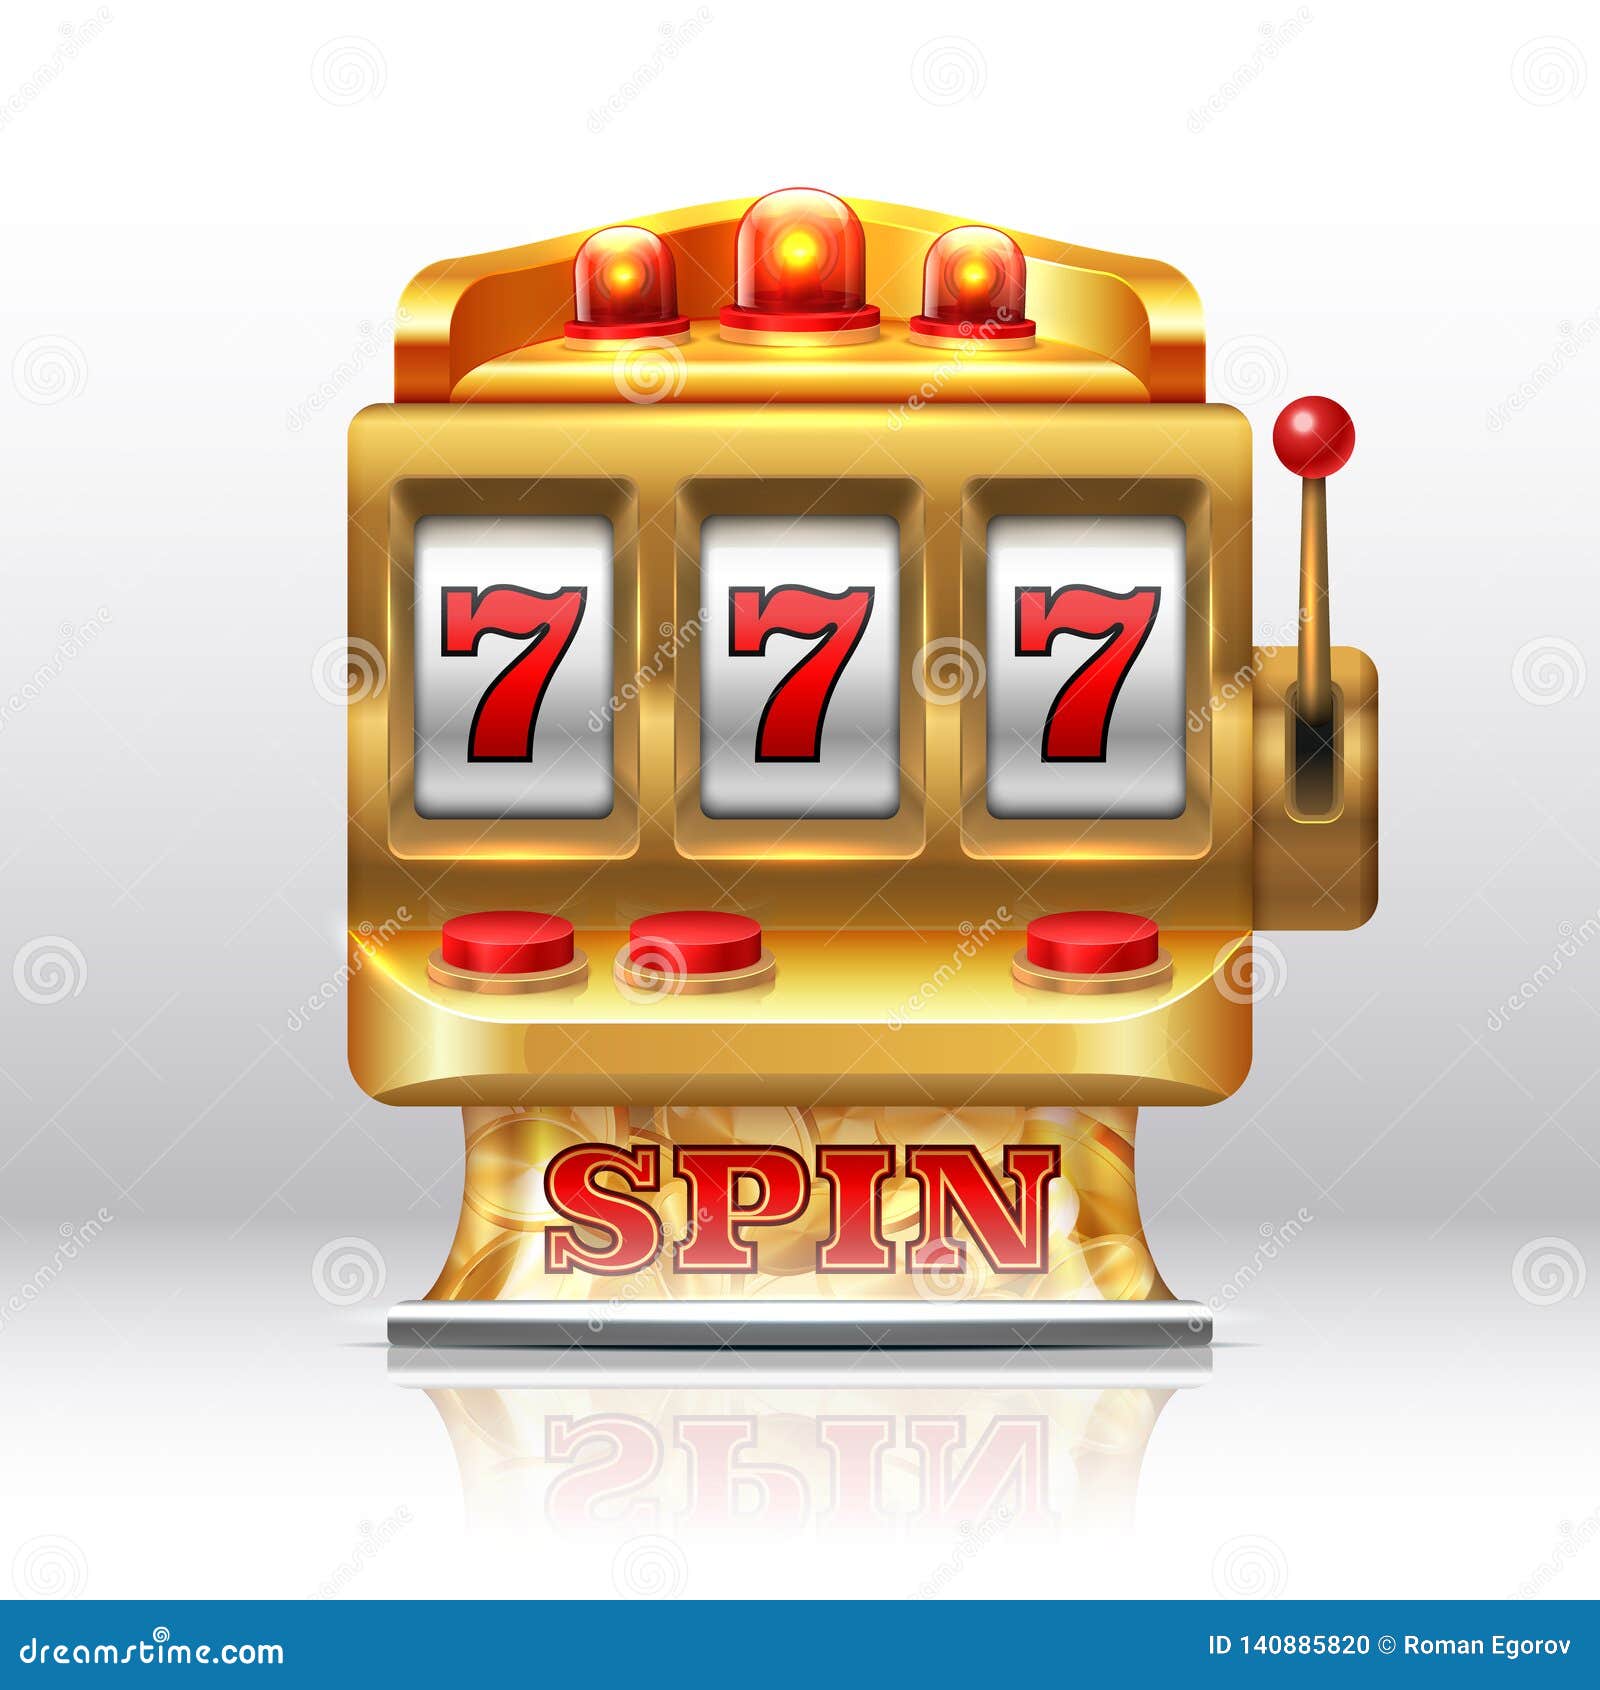 Play Absolutely No Deposit Casino Bonus